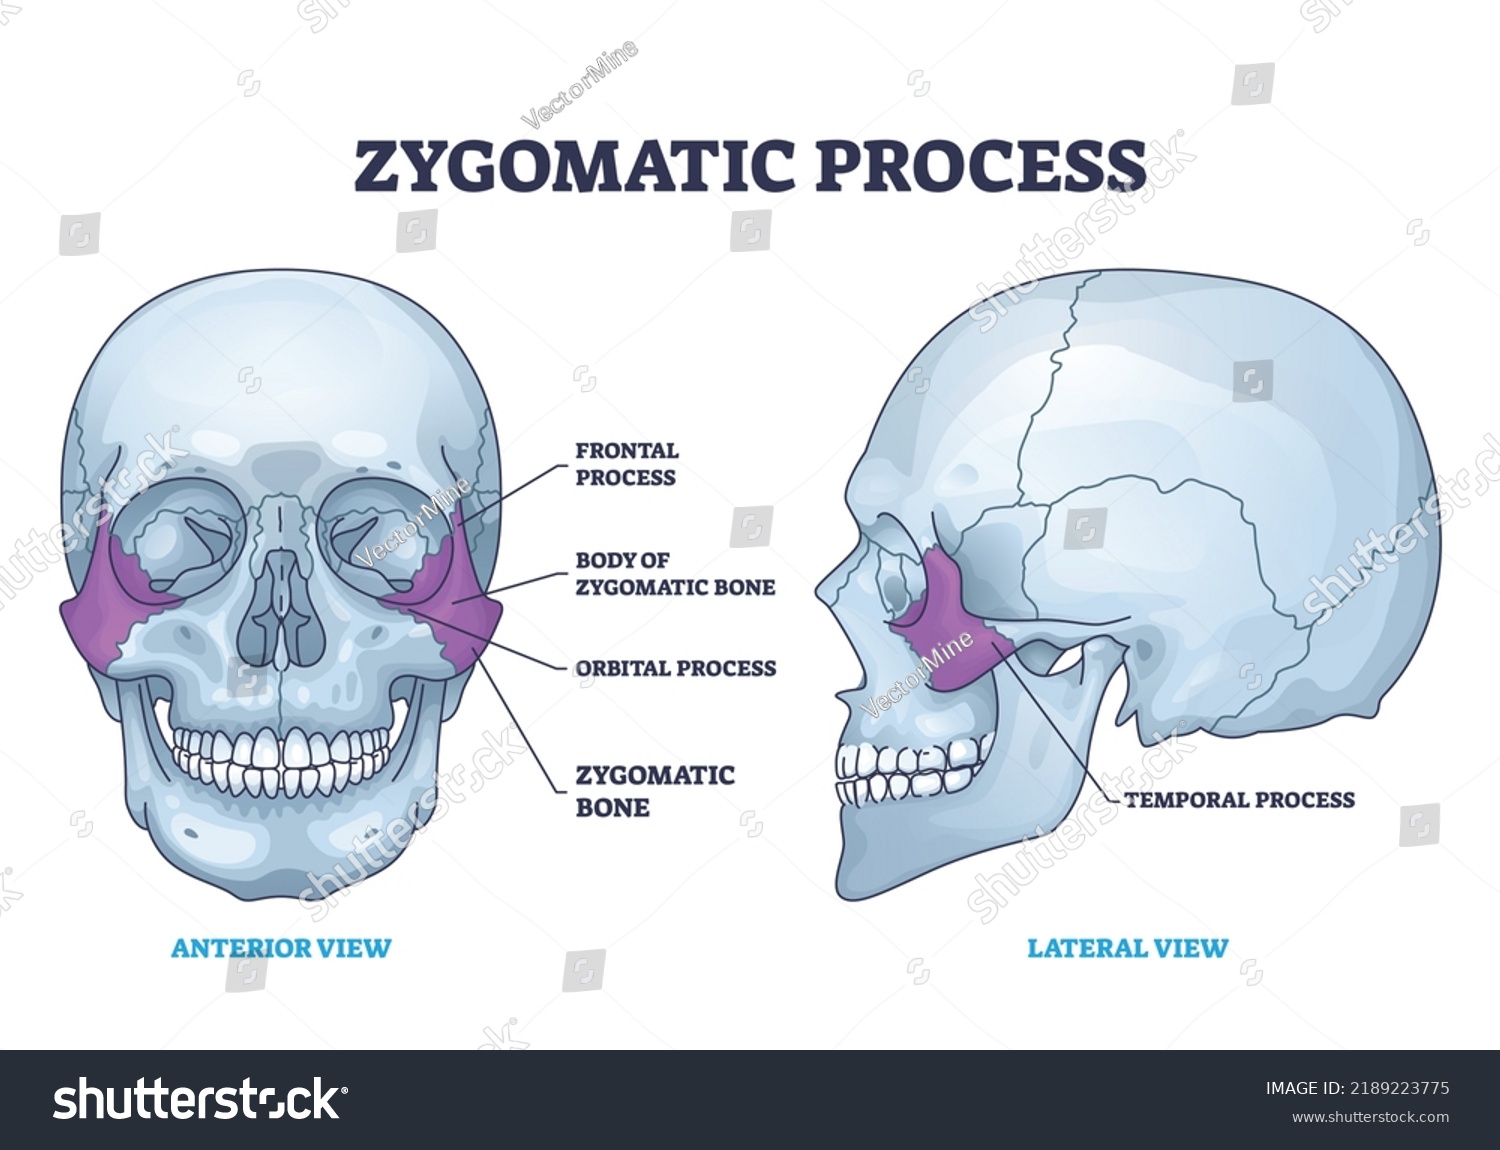 Zygomatic Process Human Cheek Bone Skeleton Stock Vector Royalty Free 2189223775 Shutterstock 8598